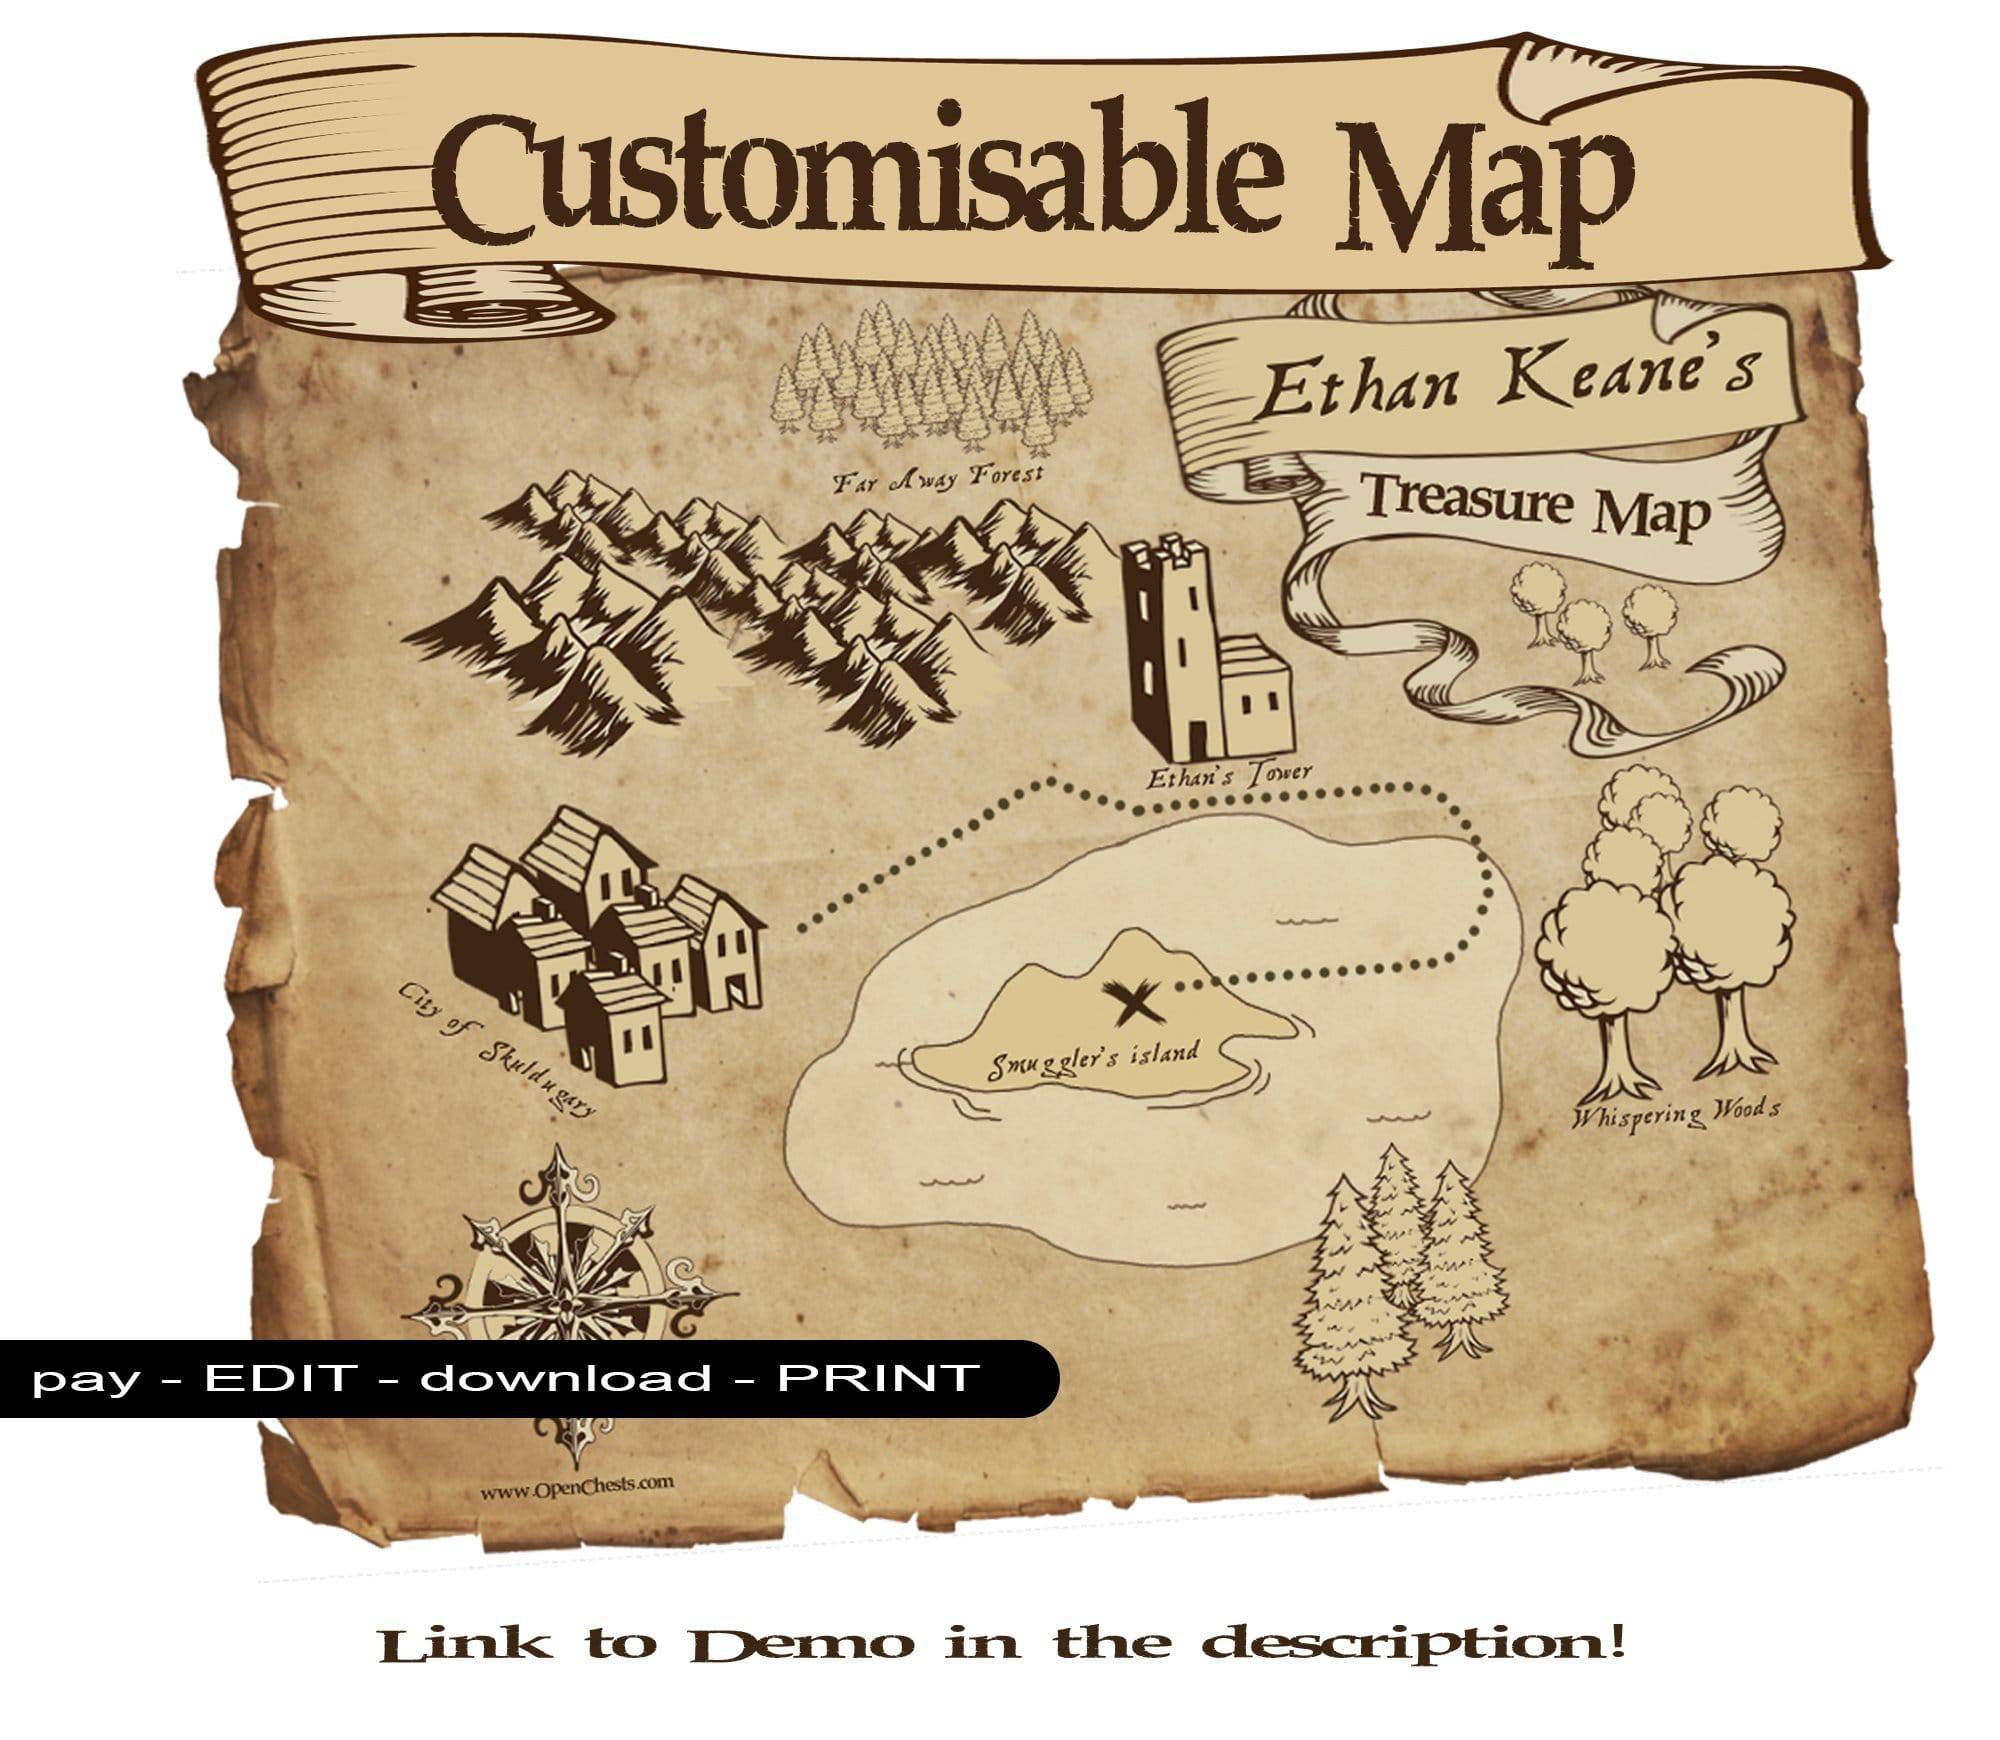 blank treasure map for kids